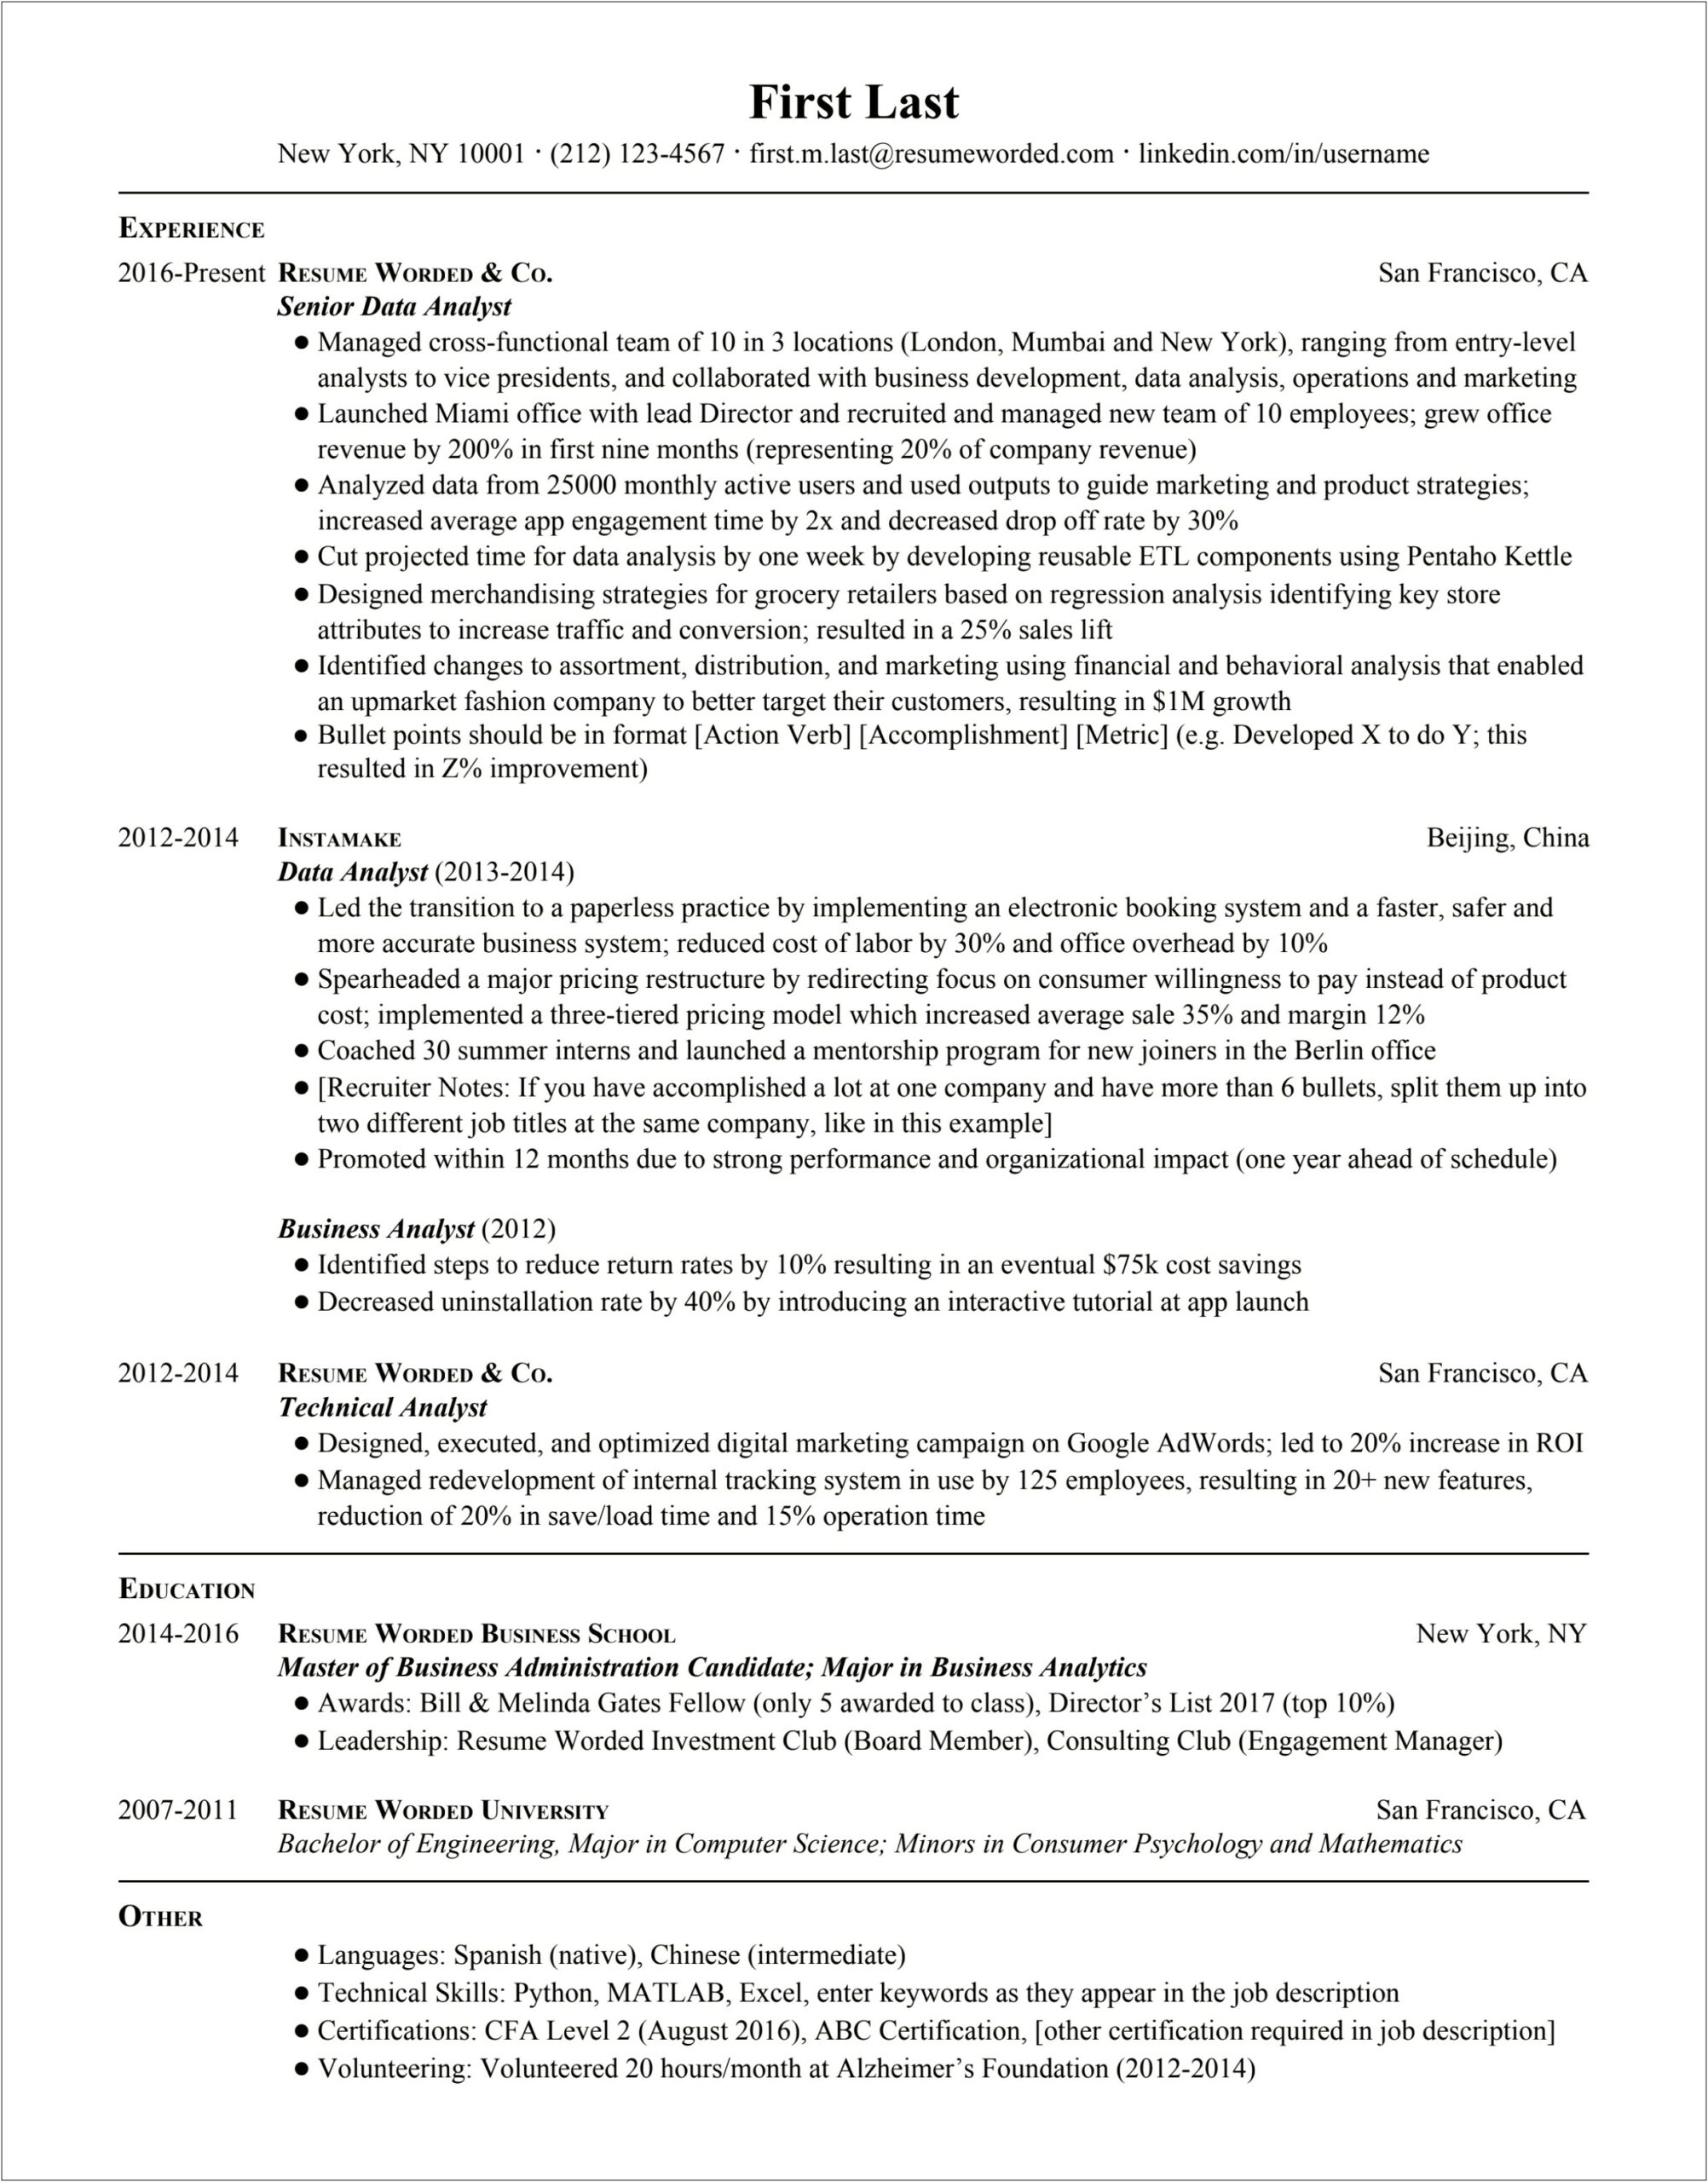 Sample Resume For Volunteer Board Position